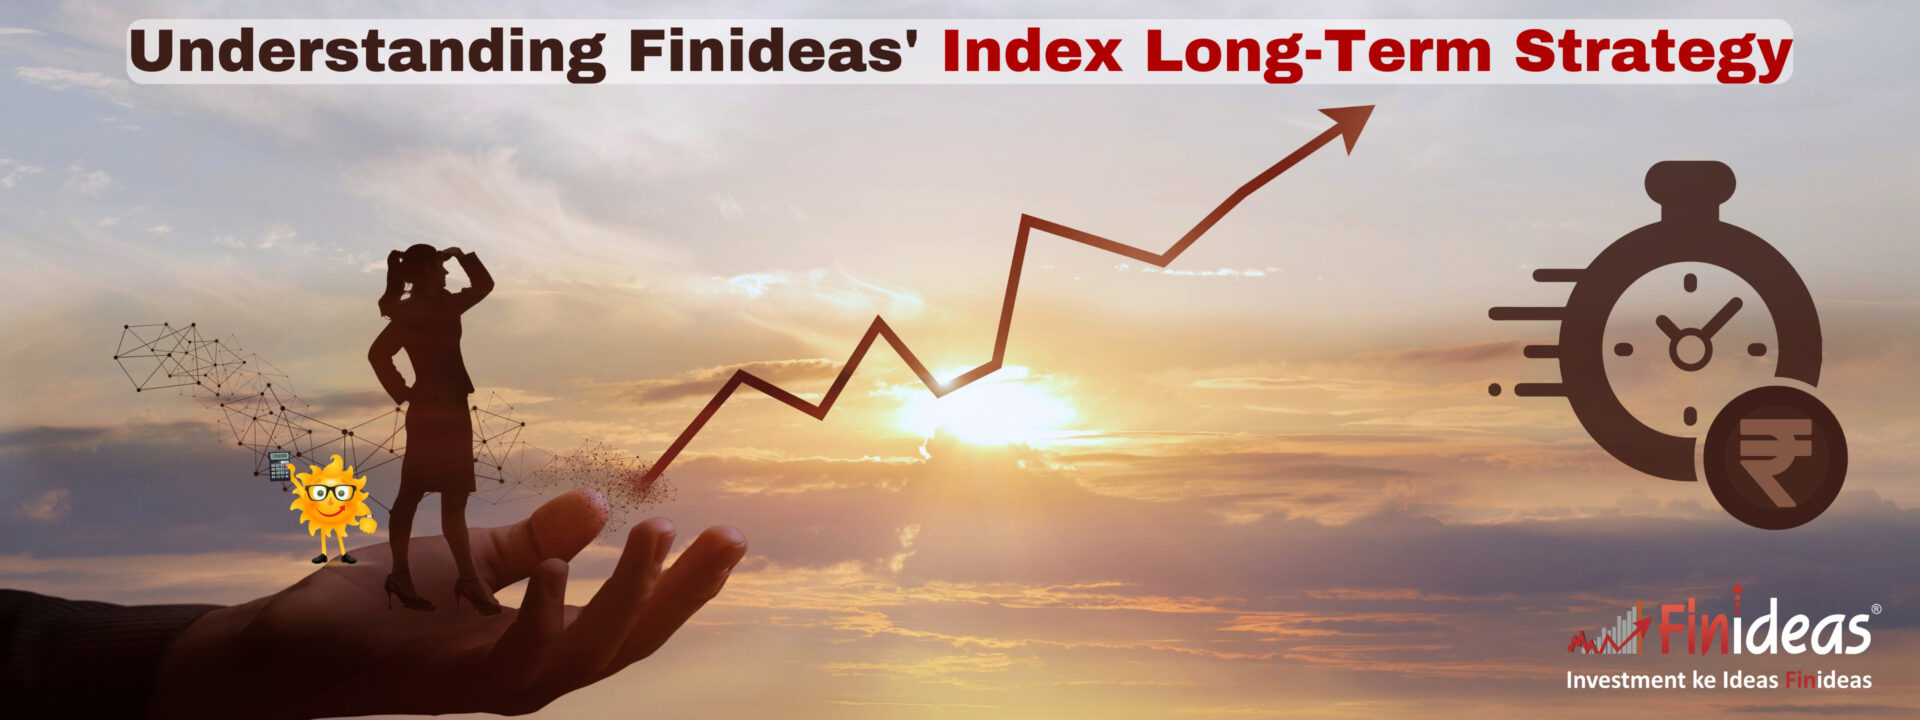 Understanding Finideas' Index Long-Term Strategy